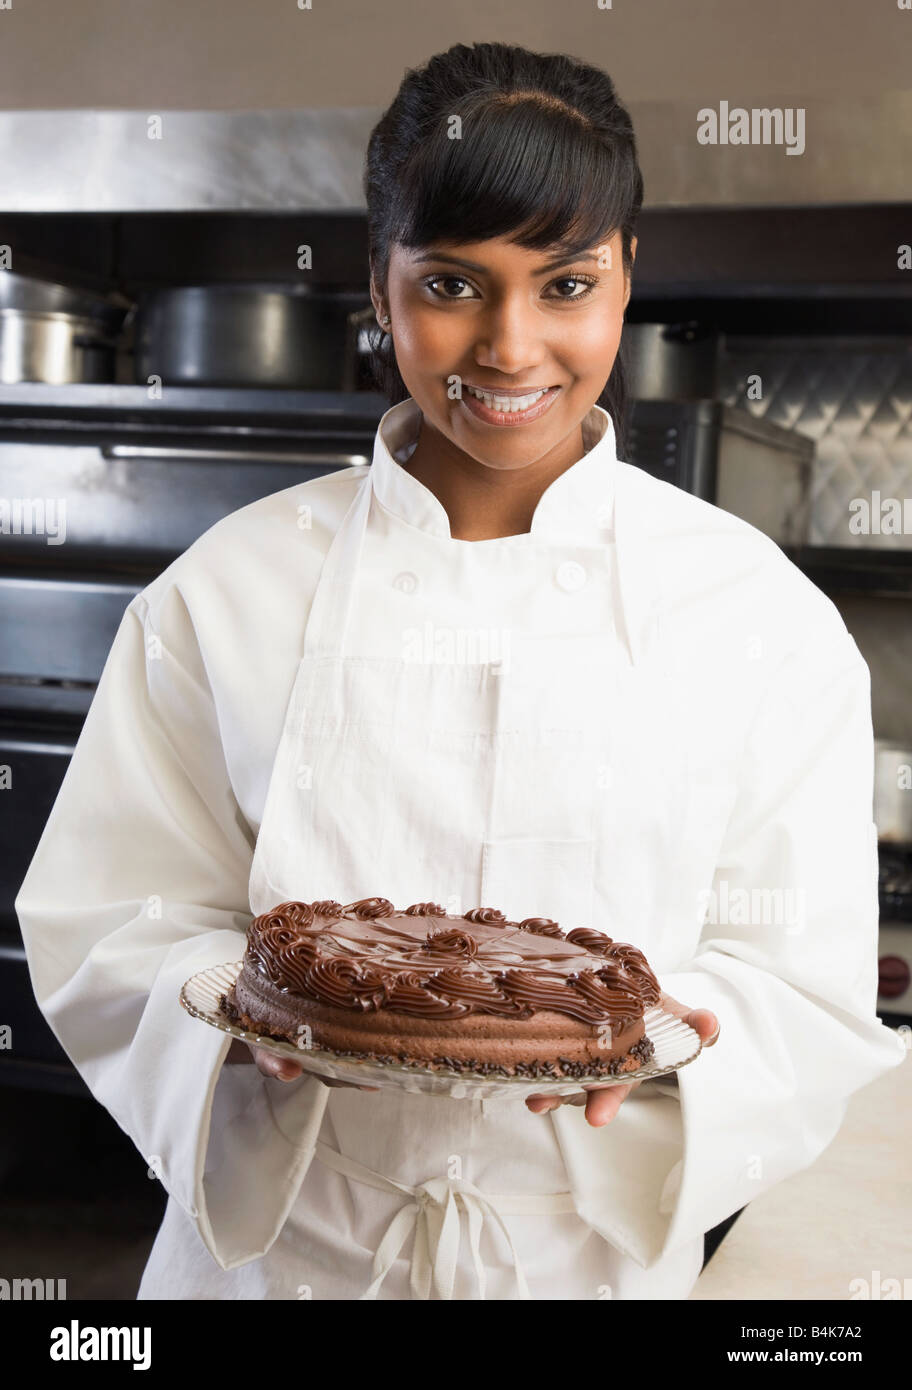 https://c8.alamy.com/comp/B4K7A2/mixed-race-female-pastry-chef-holding-cake-B4K7A2.jpg